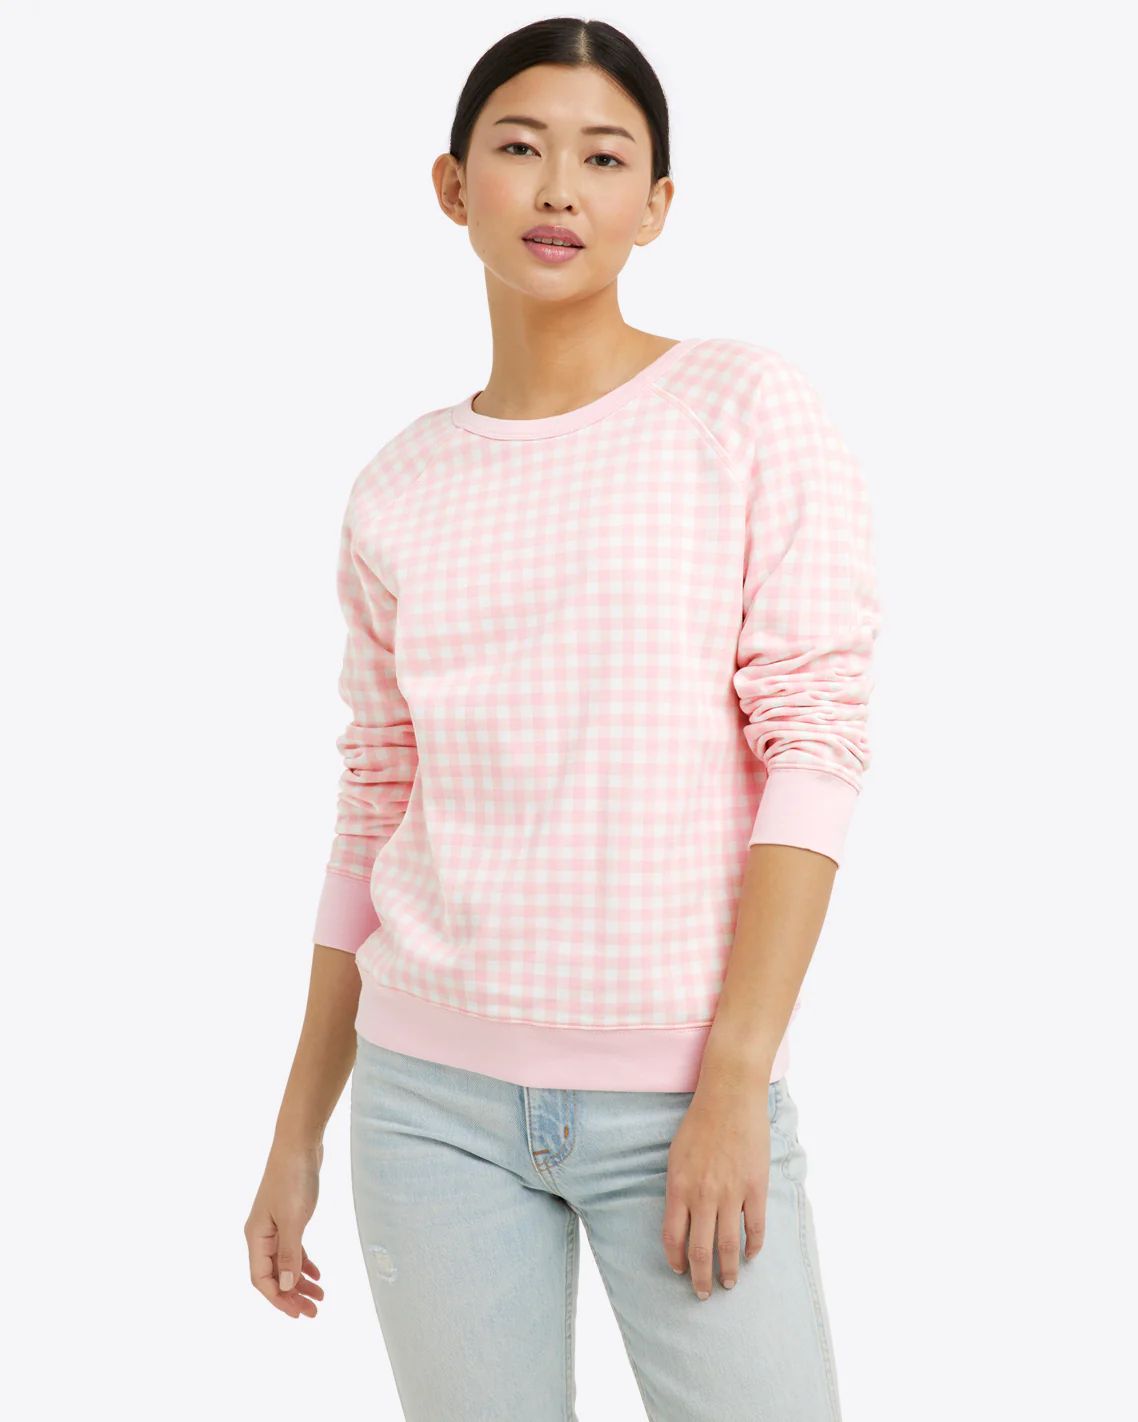 Natalie Sweatshirt in Pink Gingham | Draper James (US)